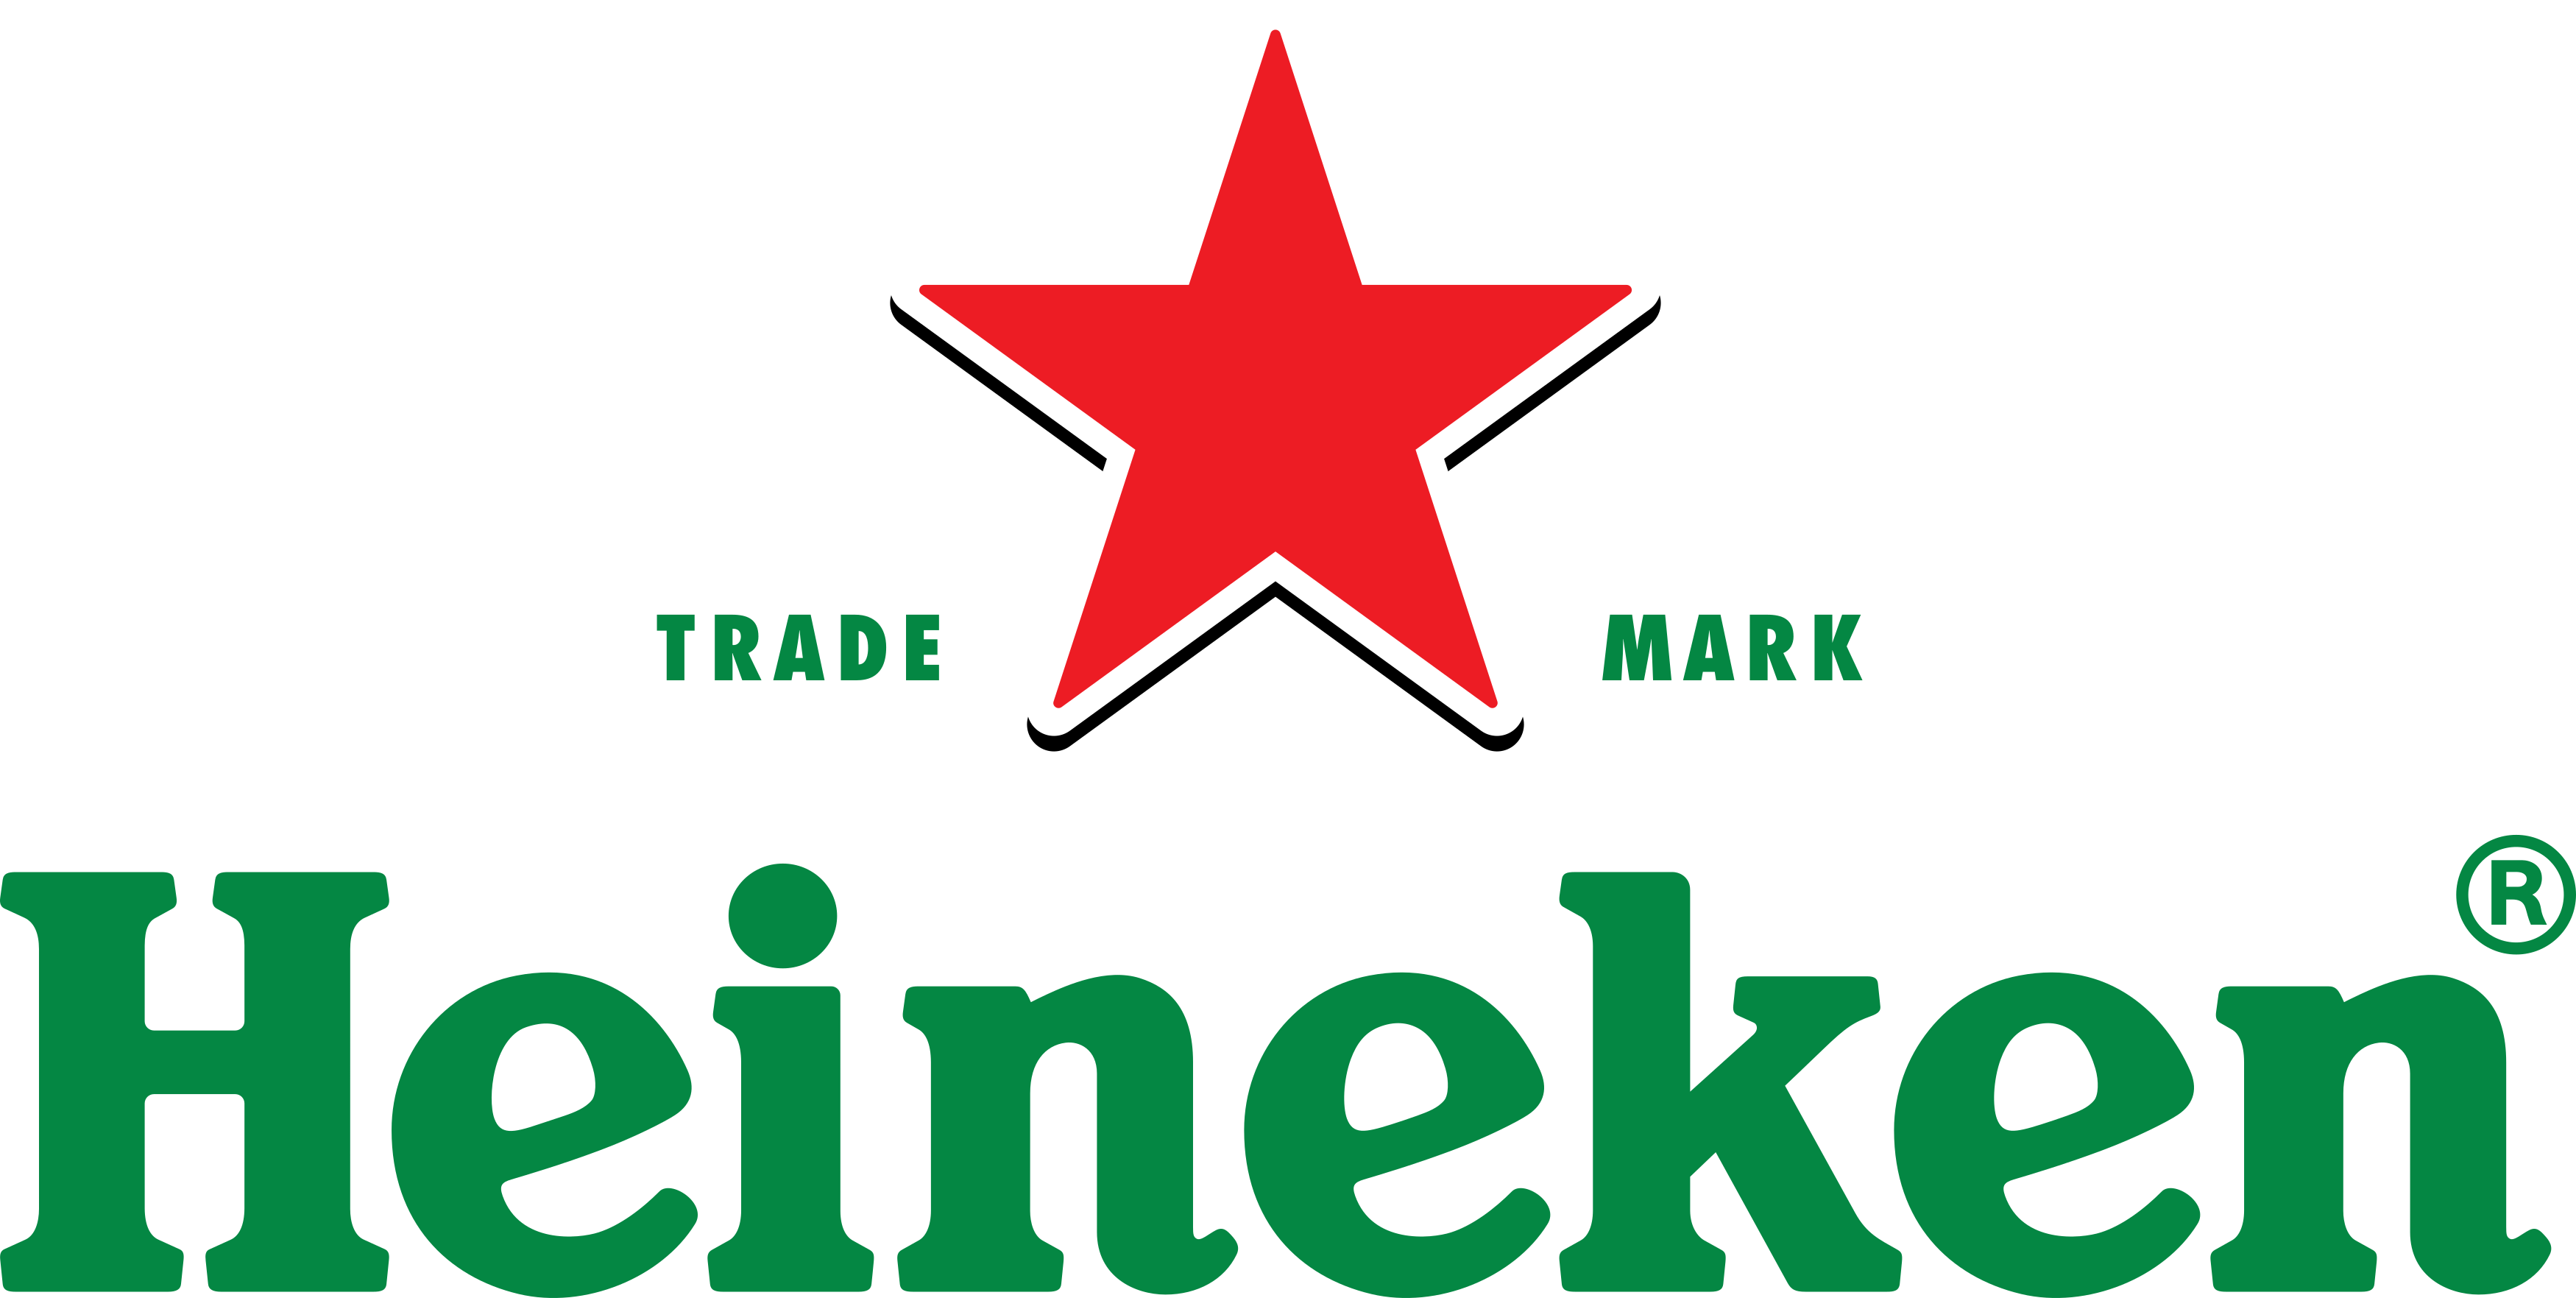 Heineken PNG Transparent Heineken PNG Images PlusPNG